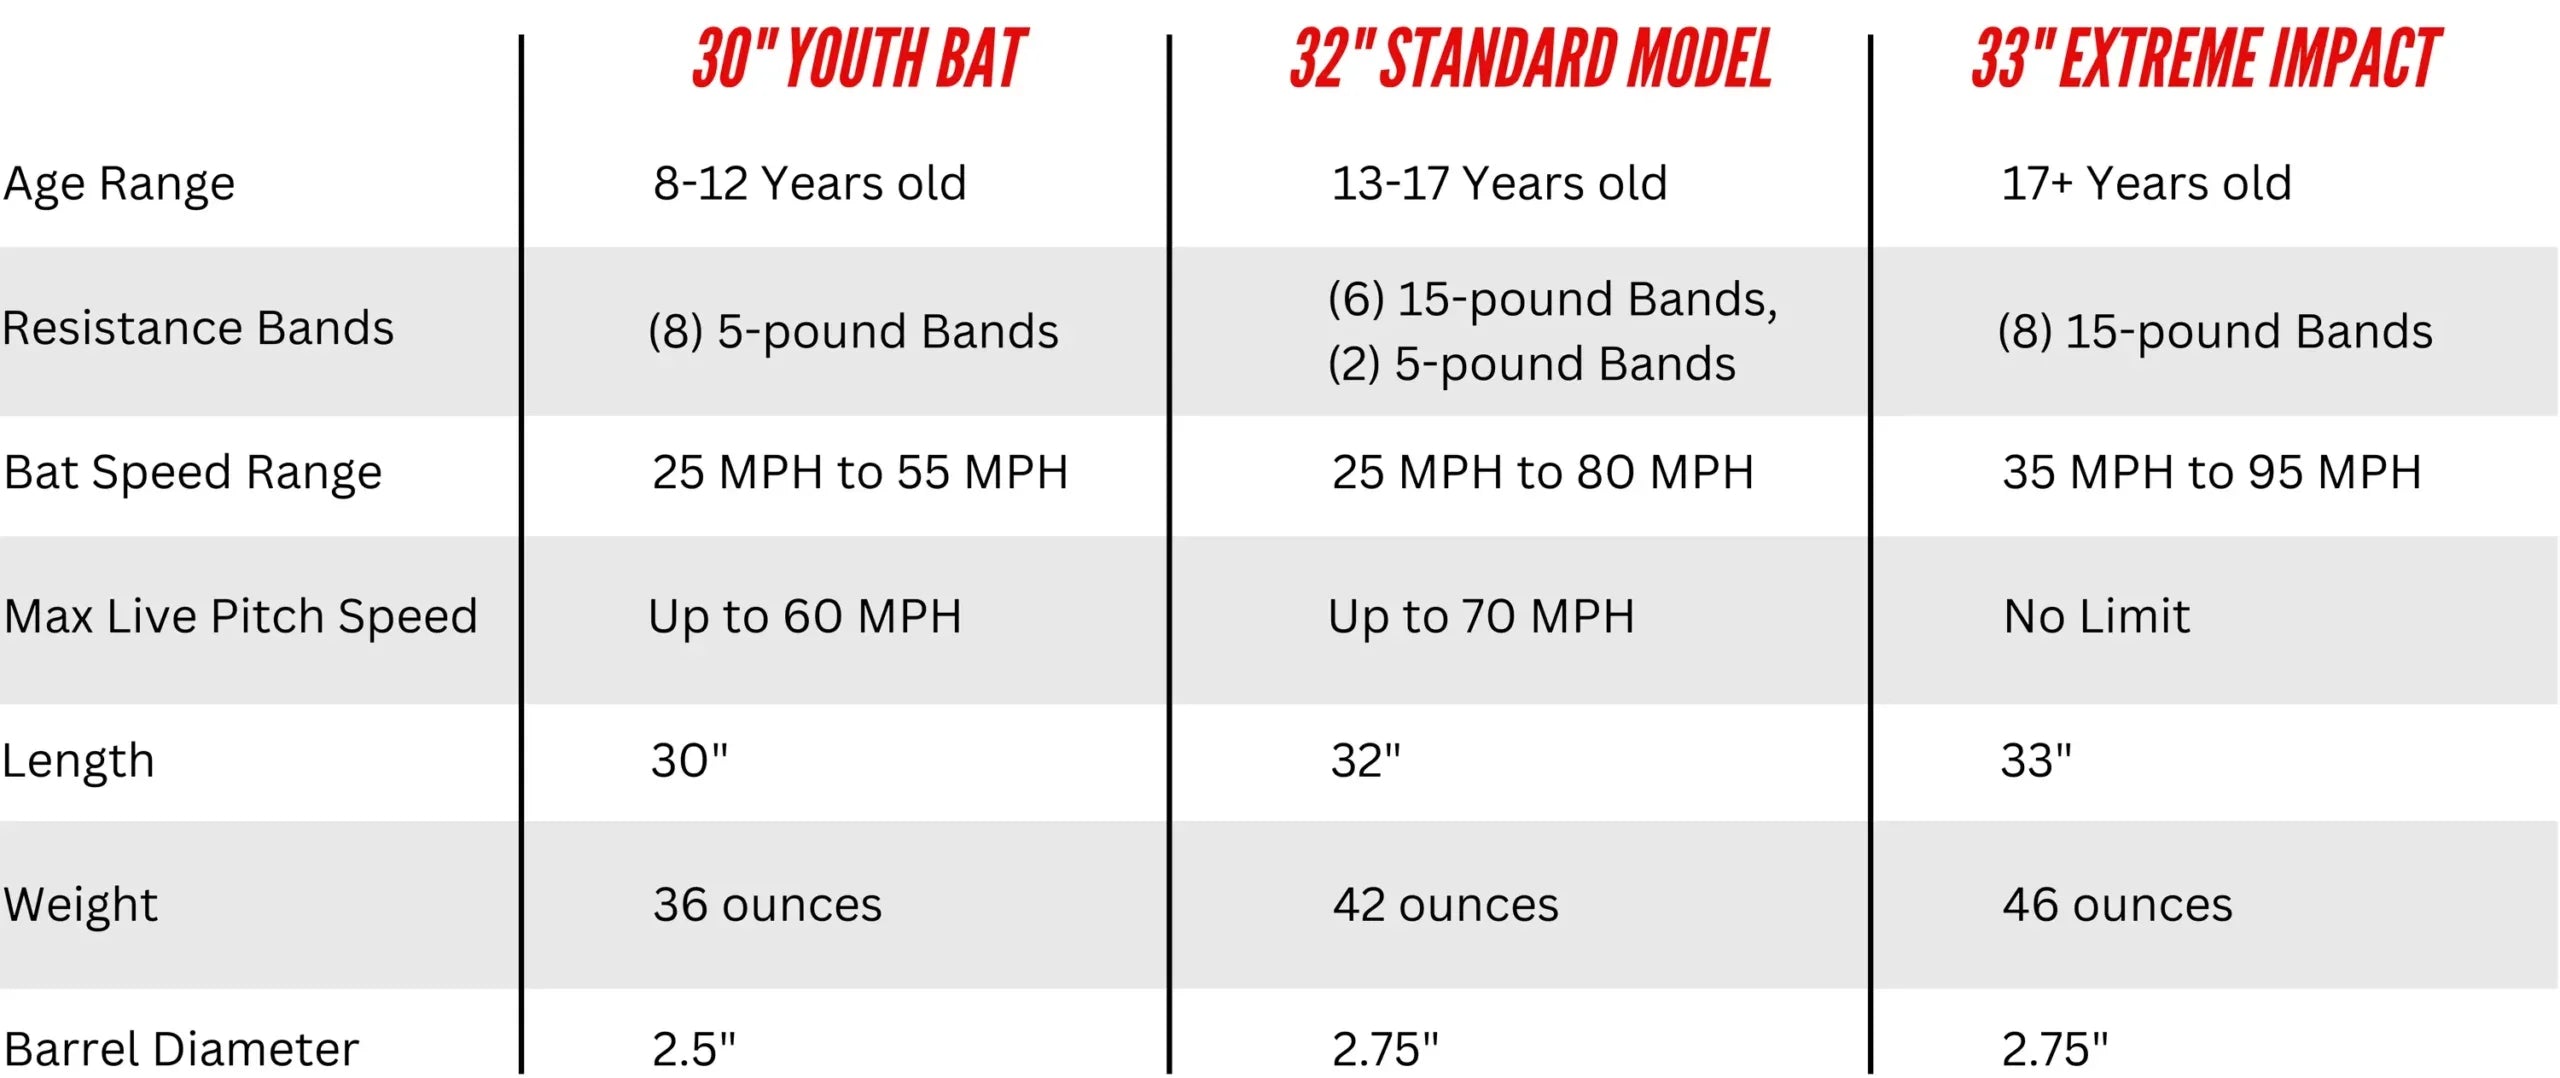 Pro Velocity Bat - 32" Standard